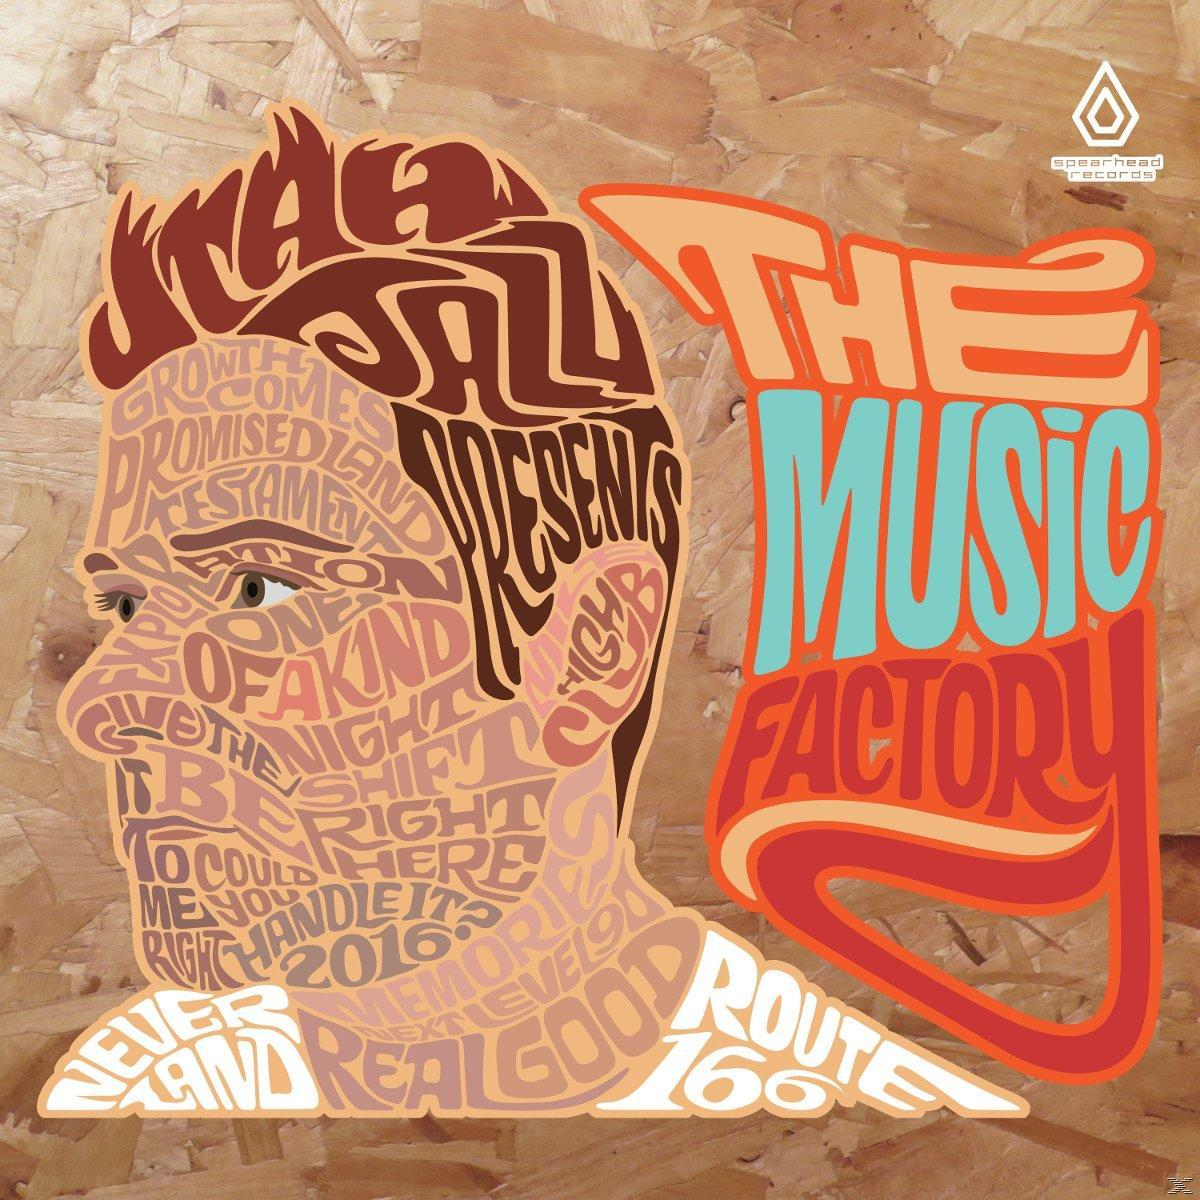 Utah Jazz - The Music - (CD) Factory